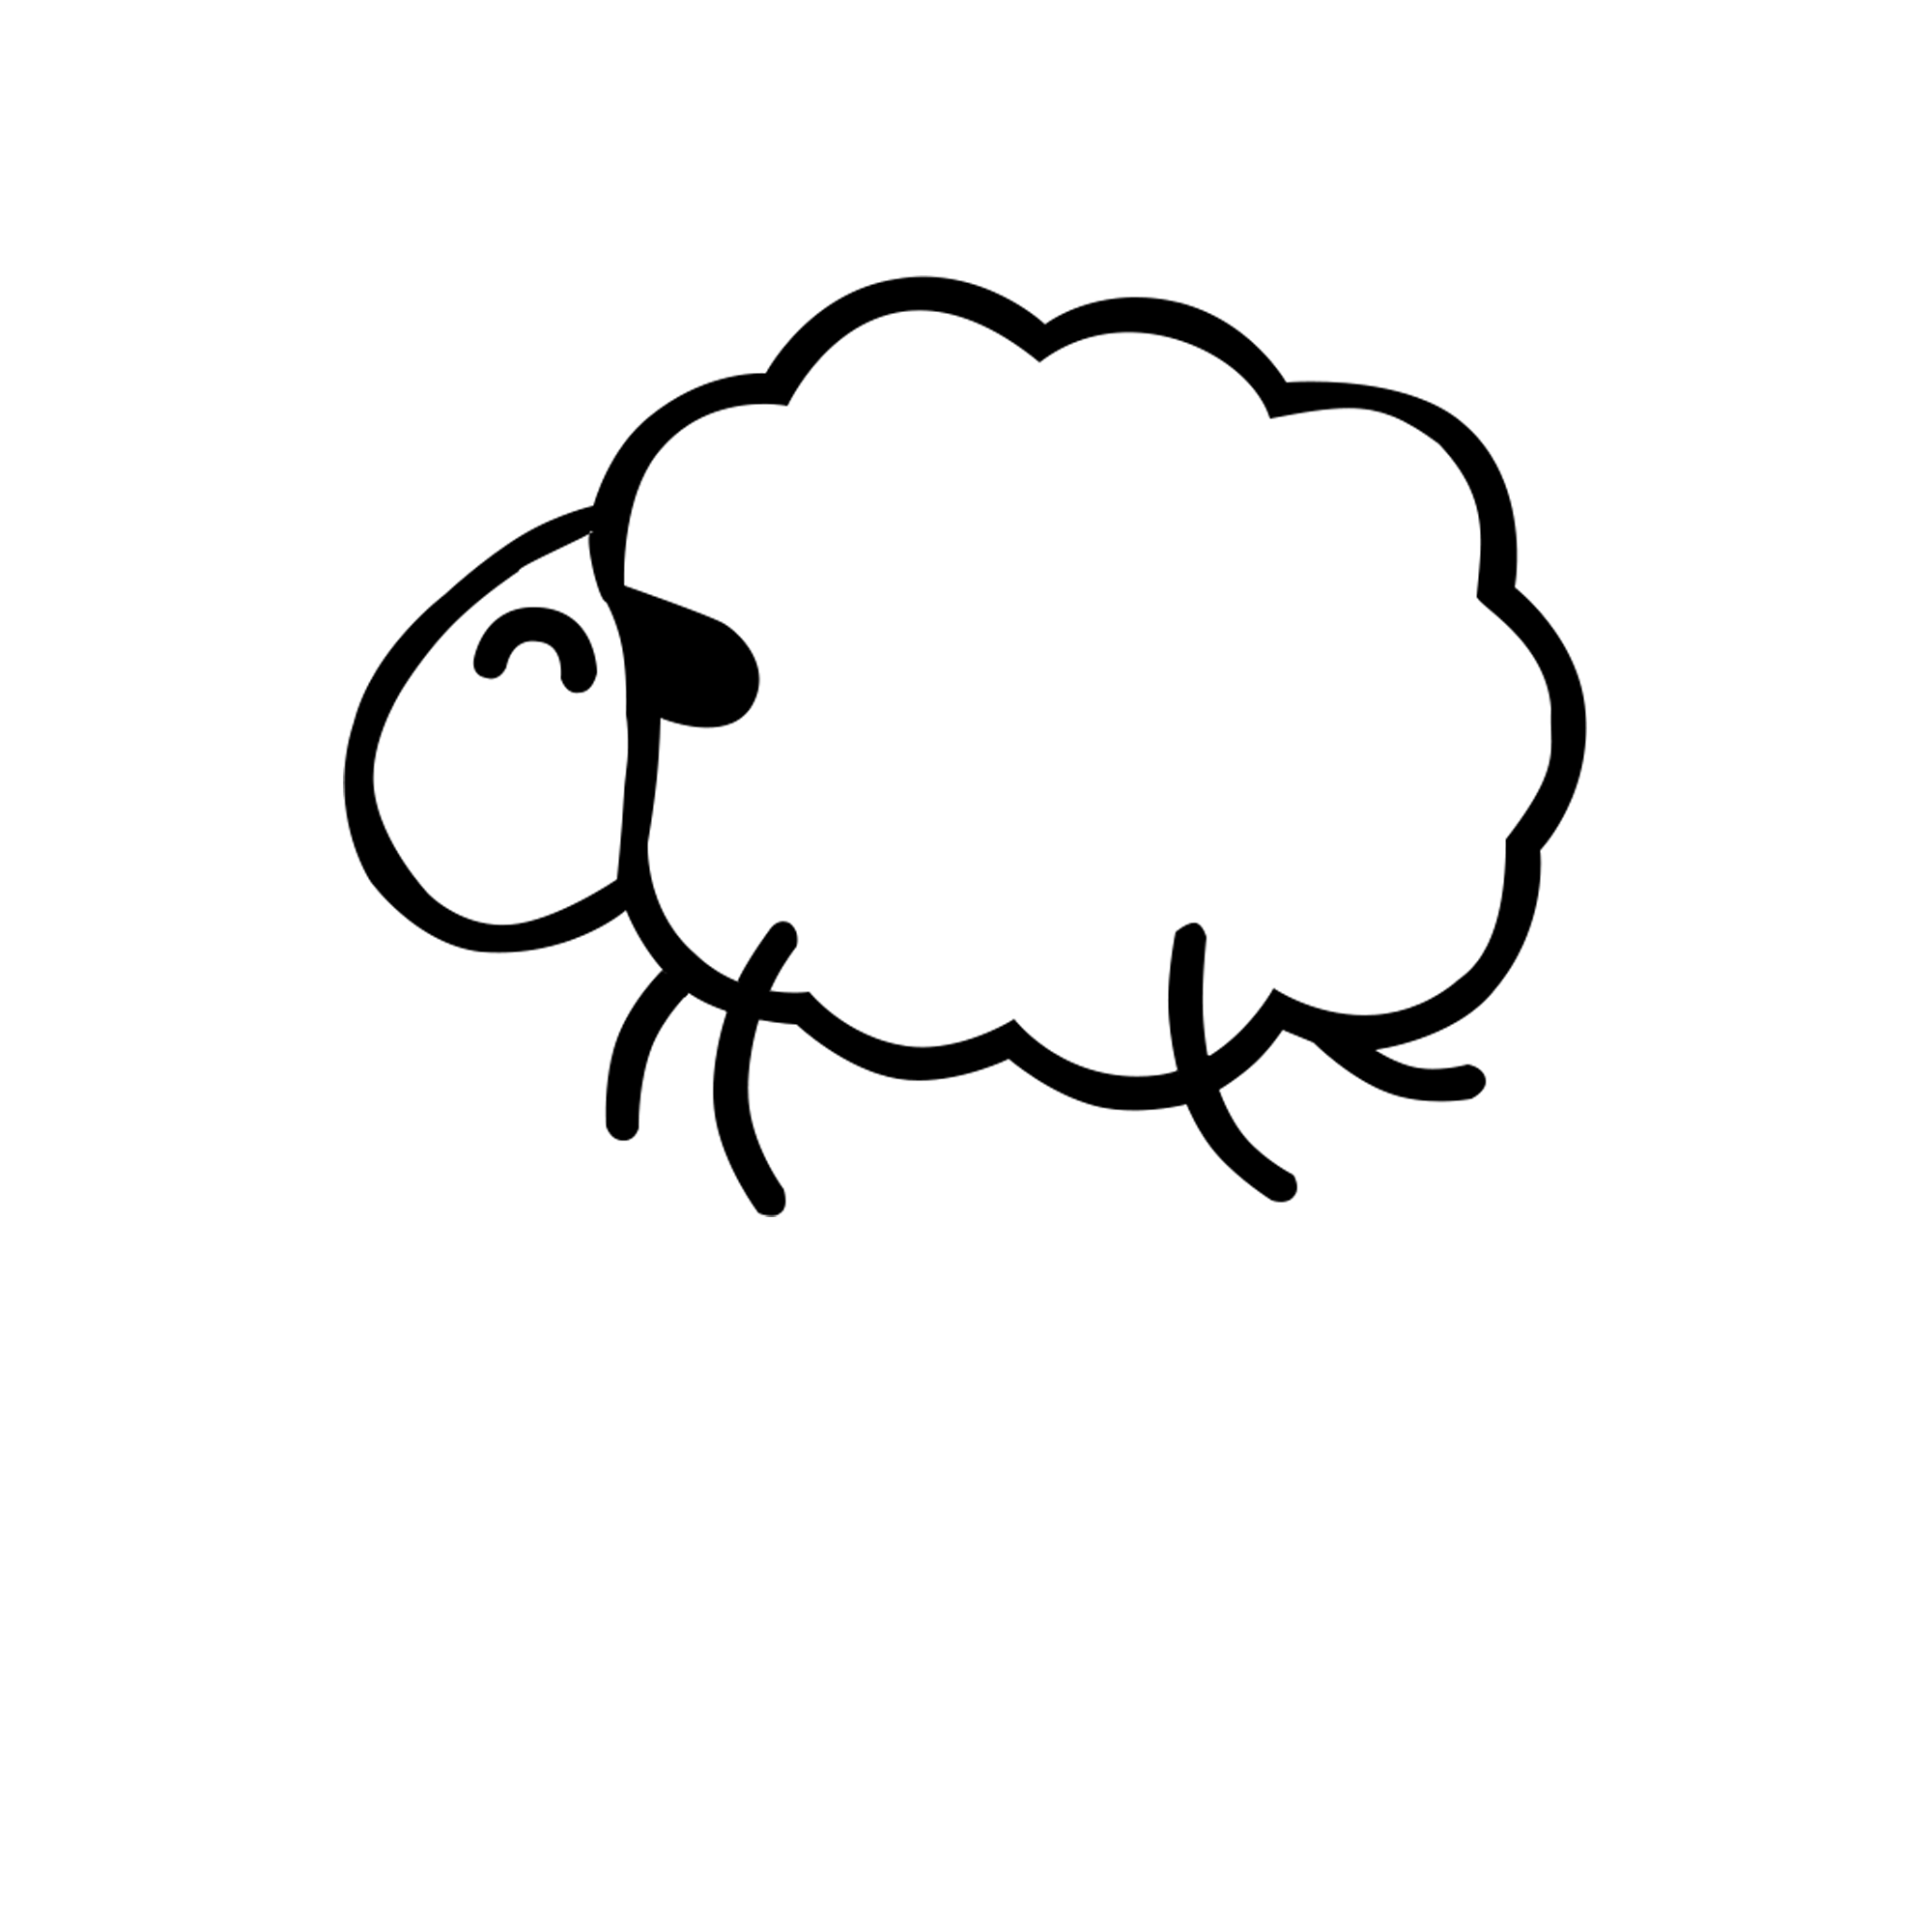 Bummelwolle